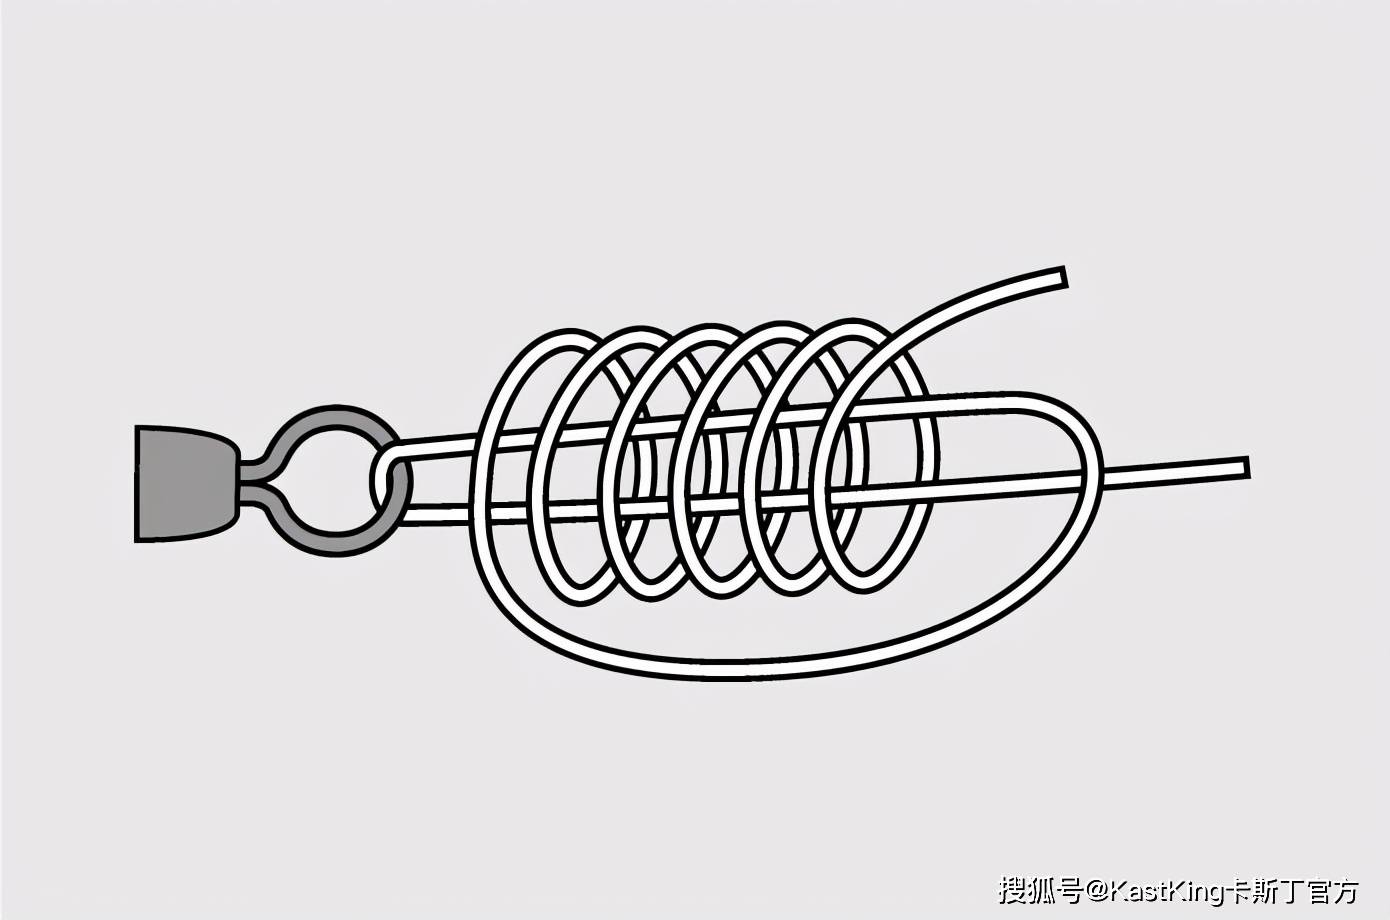 3,hangman"s 绳结(绞刑结) hangman"s 结也是钢丝绳打结方法之一,这是